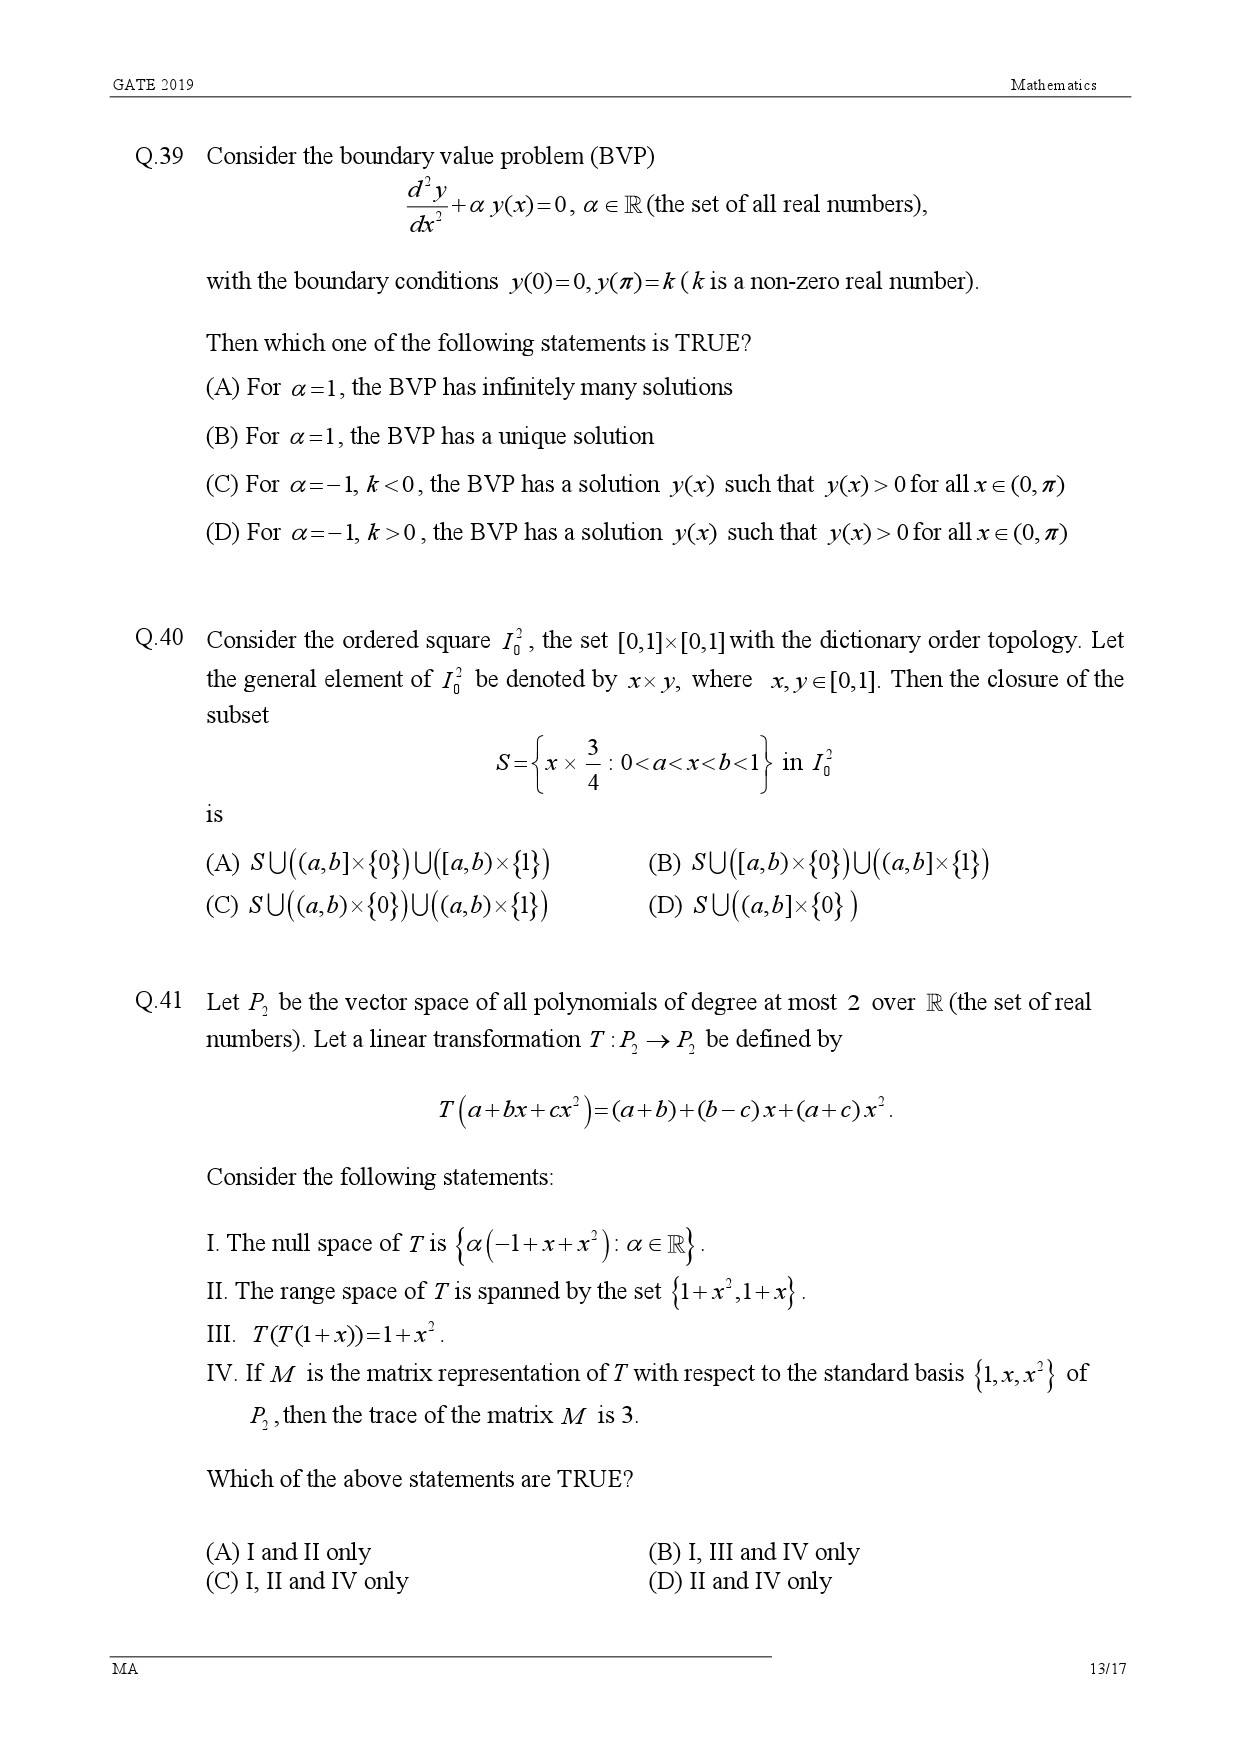 GATE Exam Question Paper 2019 Mathematics 16